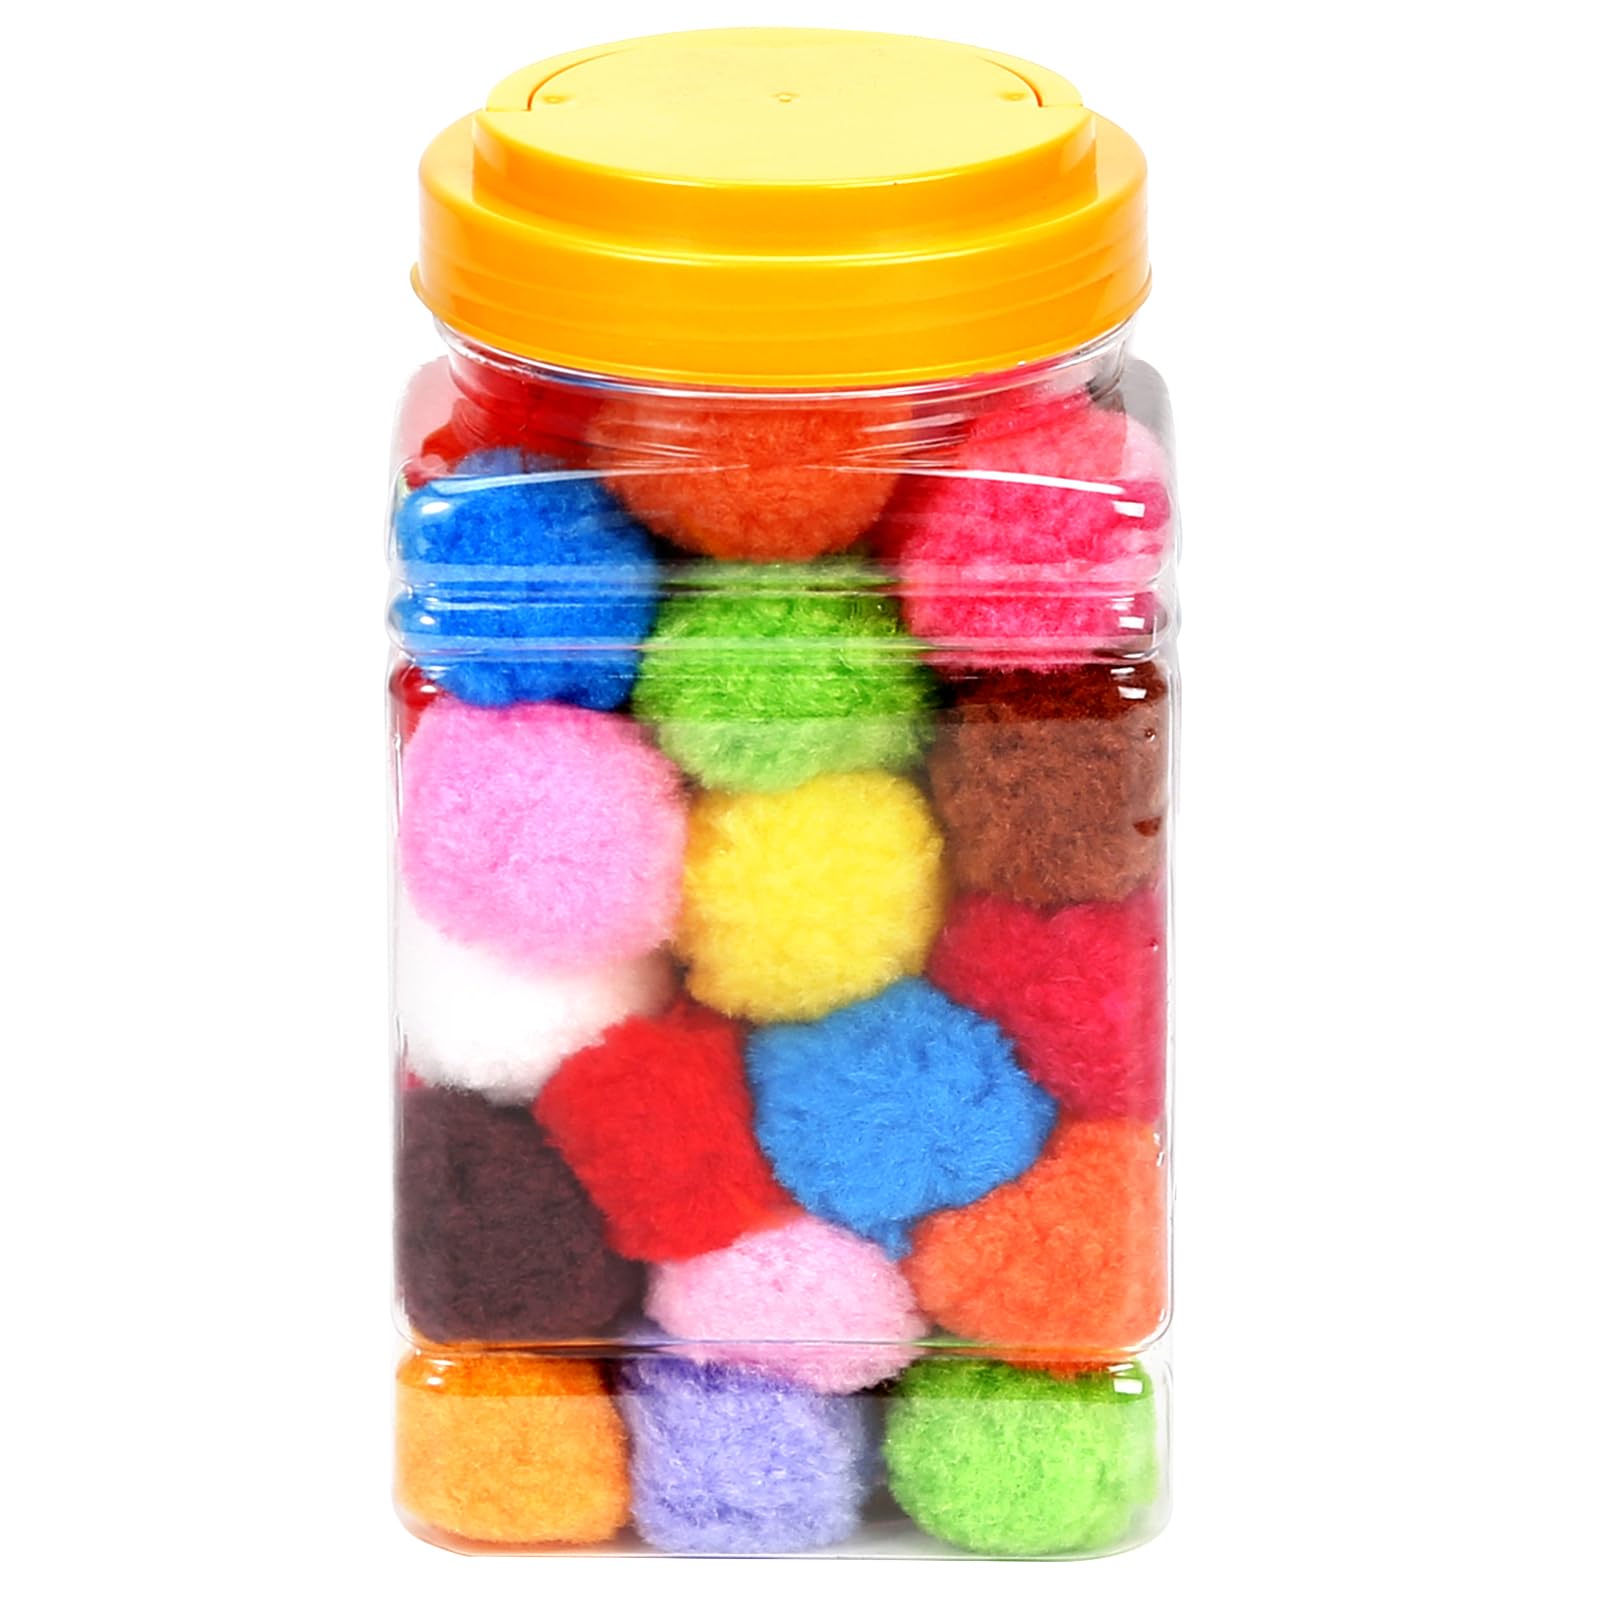 Multicolor 1.5 inch Pom-Poms, 15 Pack